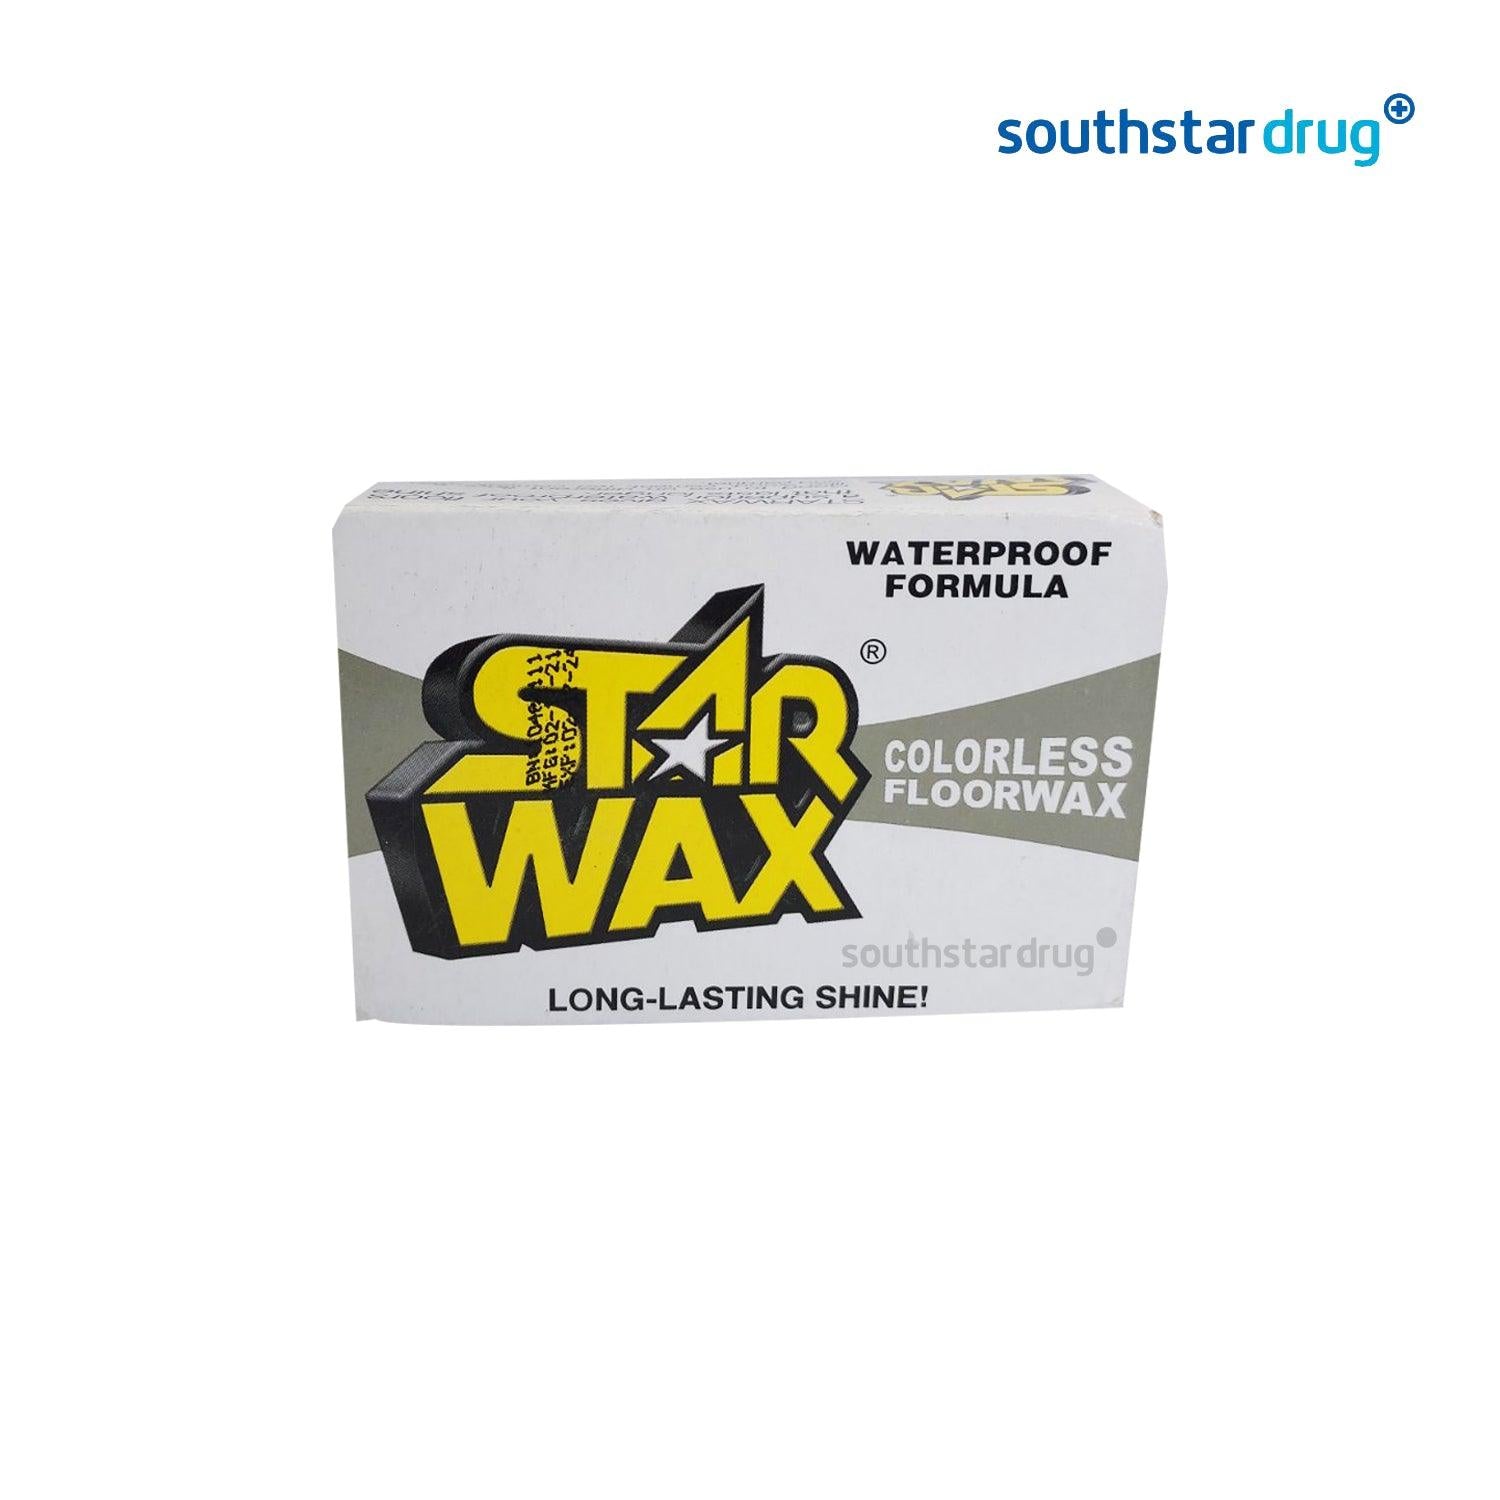 Buy Starwax Colorless Floorwax Online